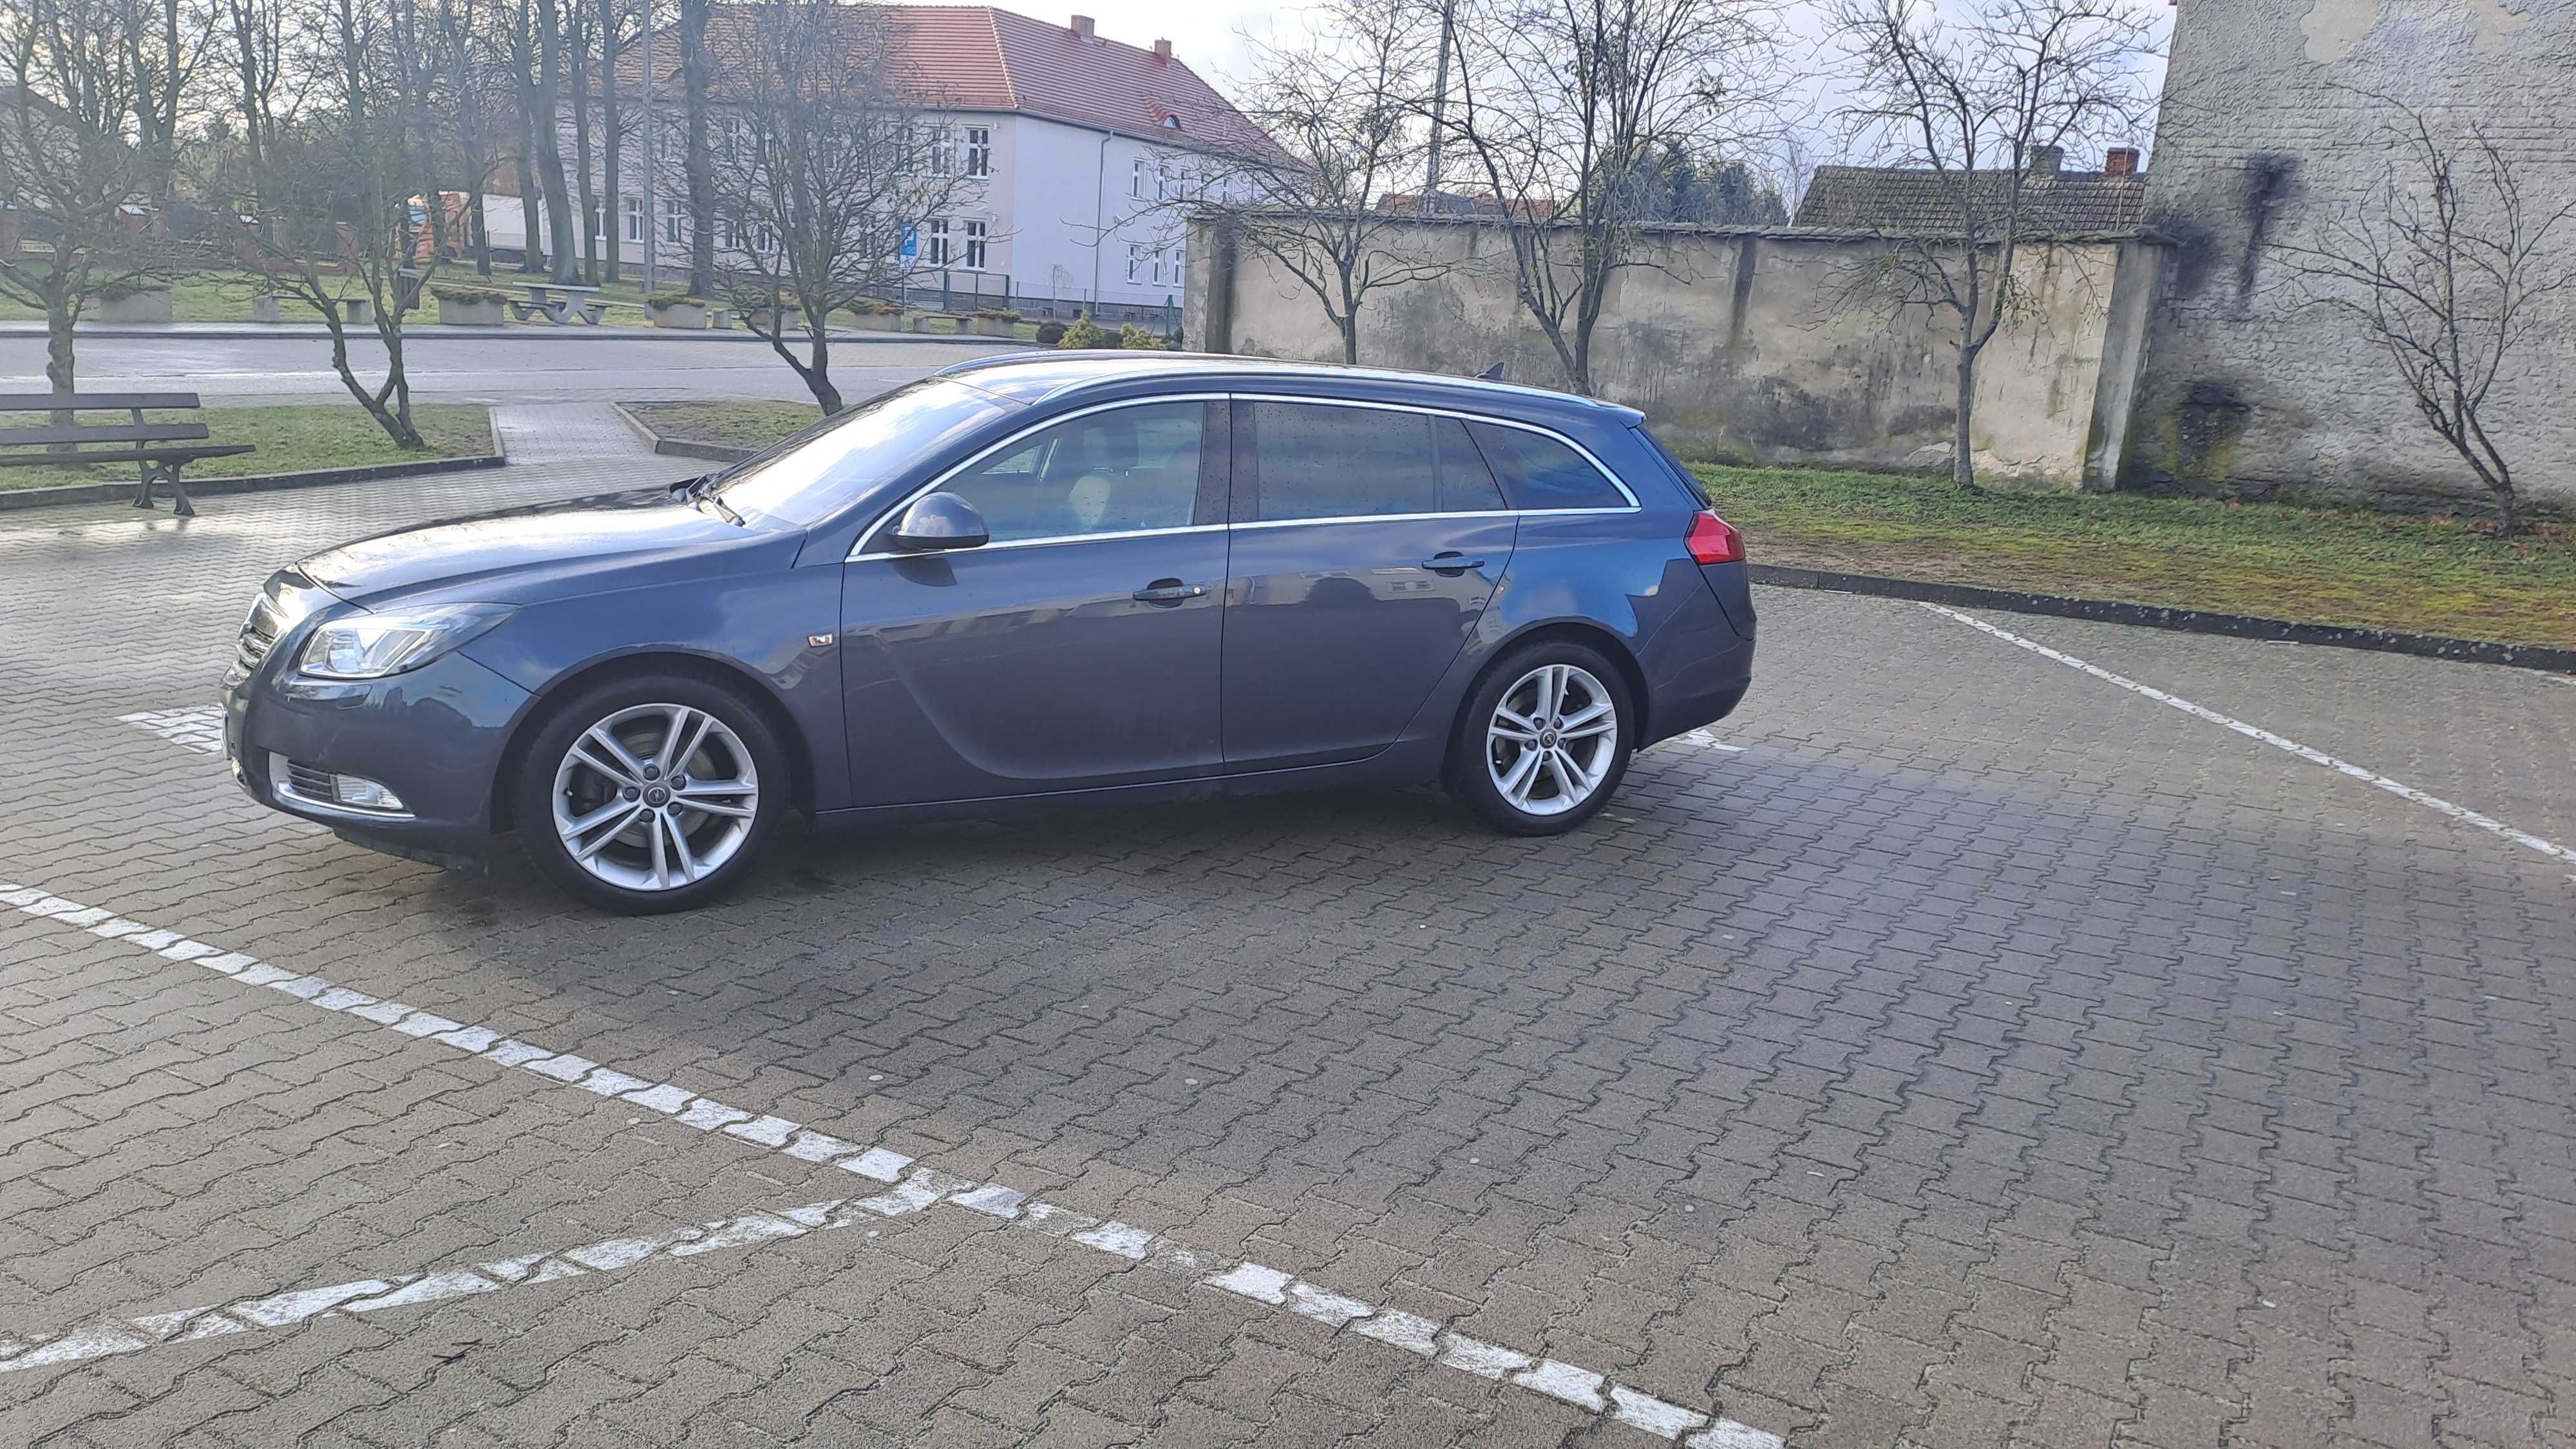 Opel Insygnia 2.0 CDTI 160km PRZEBIEG 172000